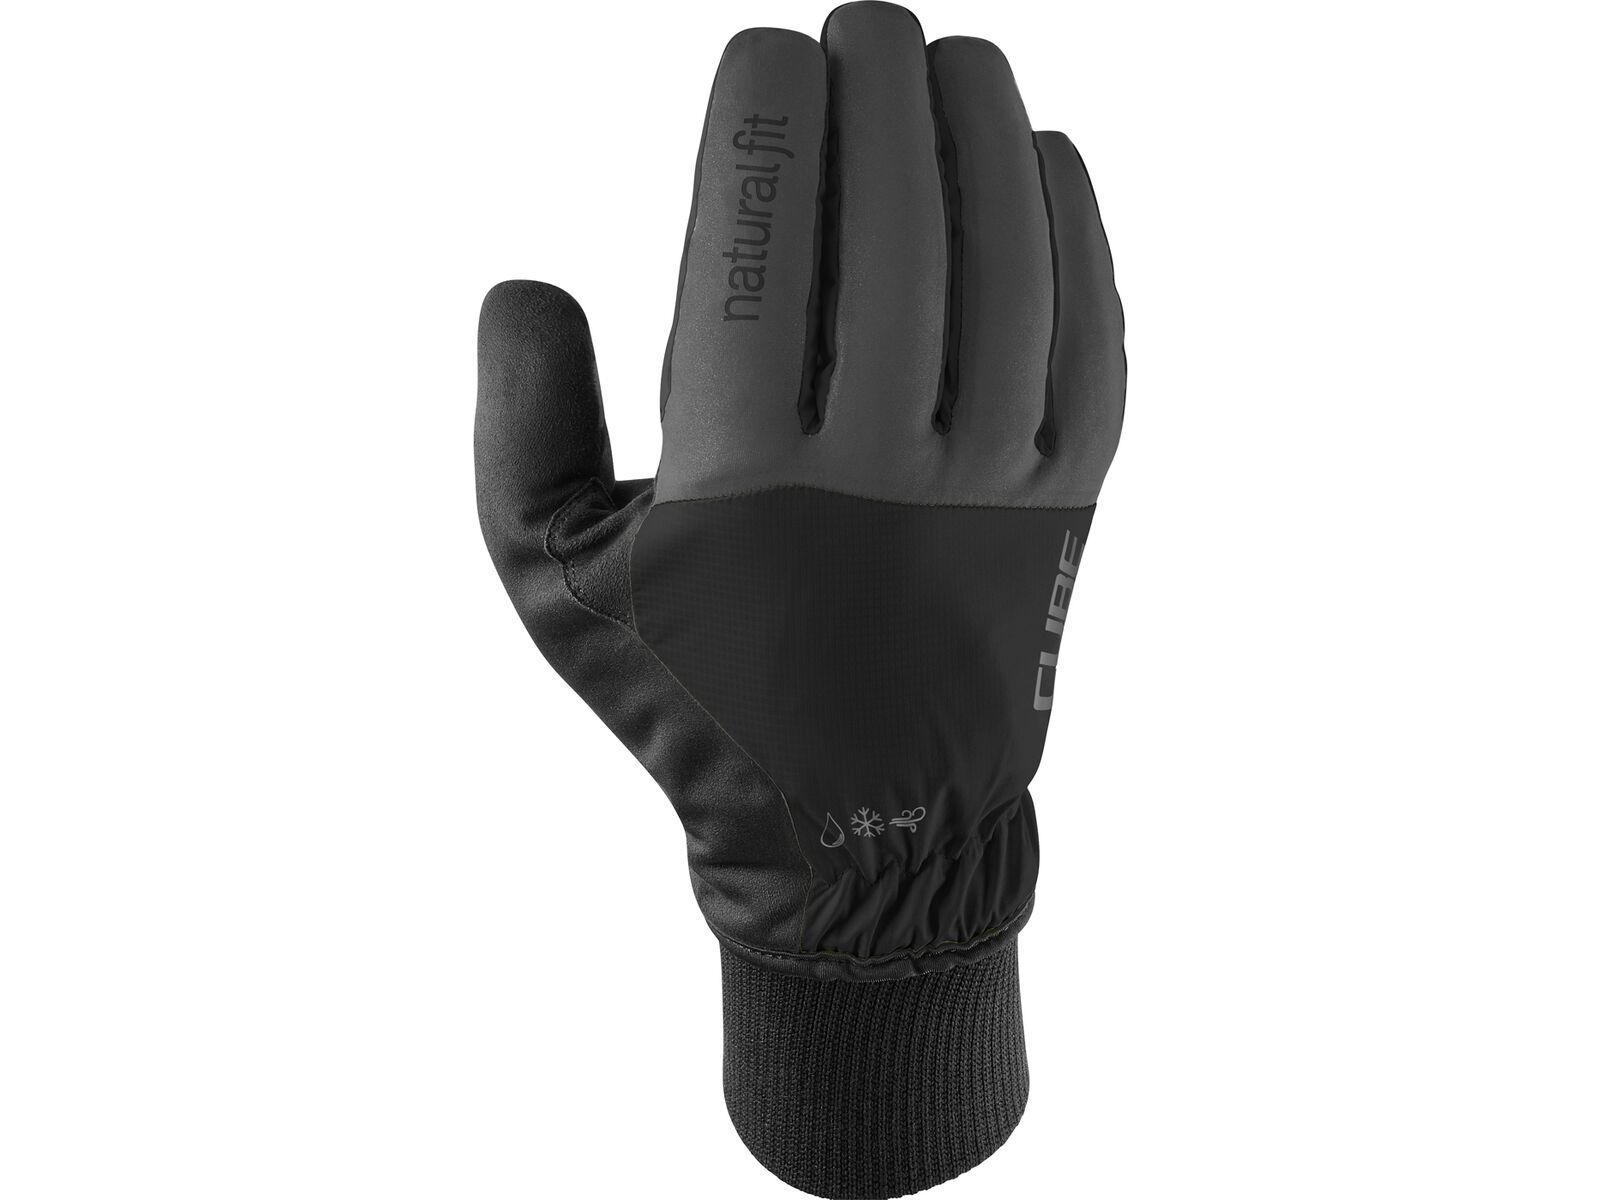 Cube Handschuhe Winter Langfinger X Natural Fit, black | Bild 1